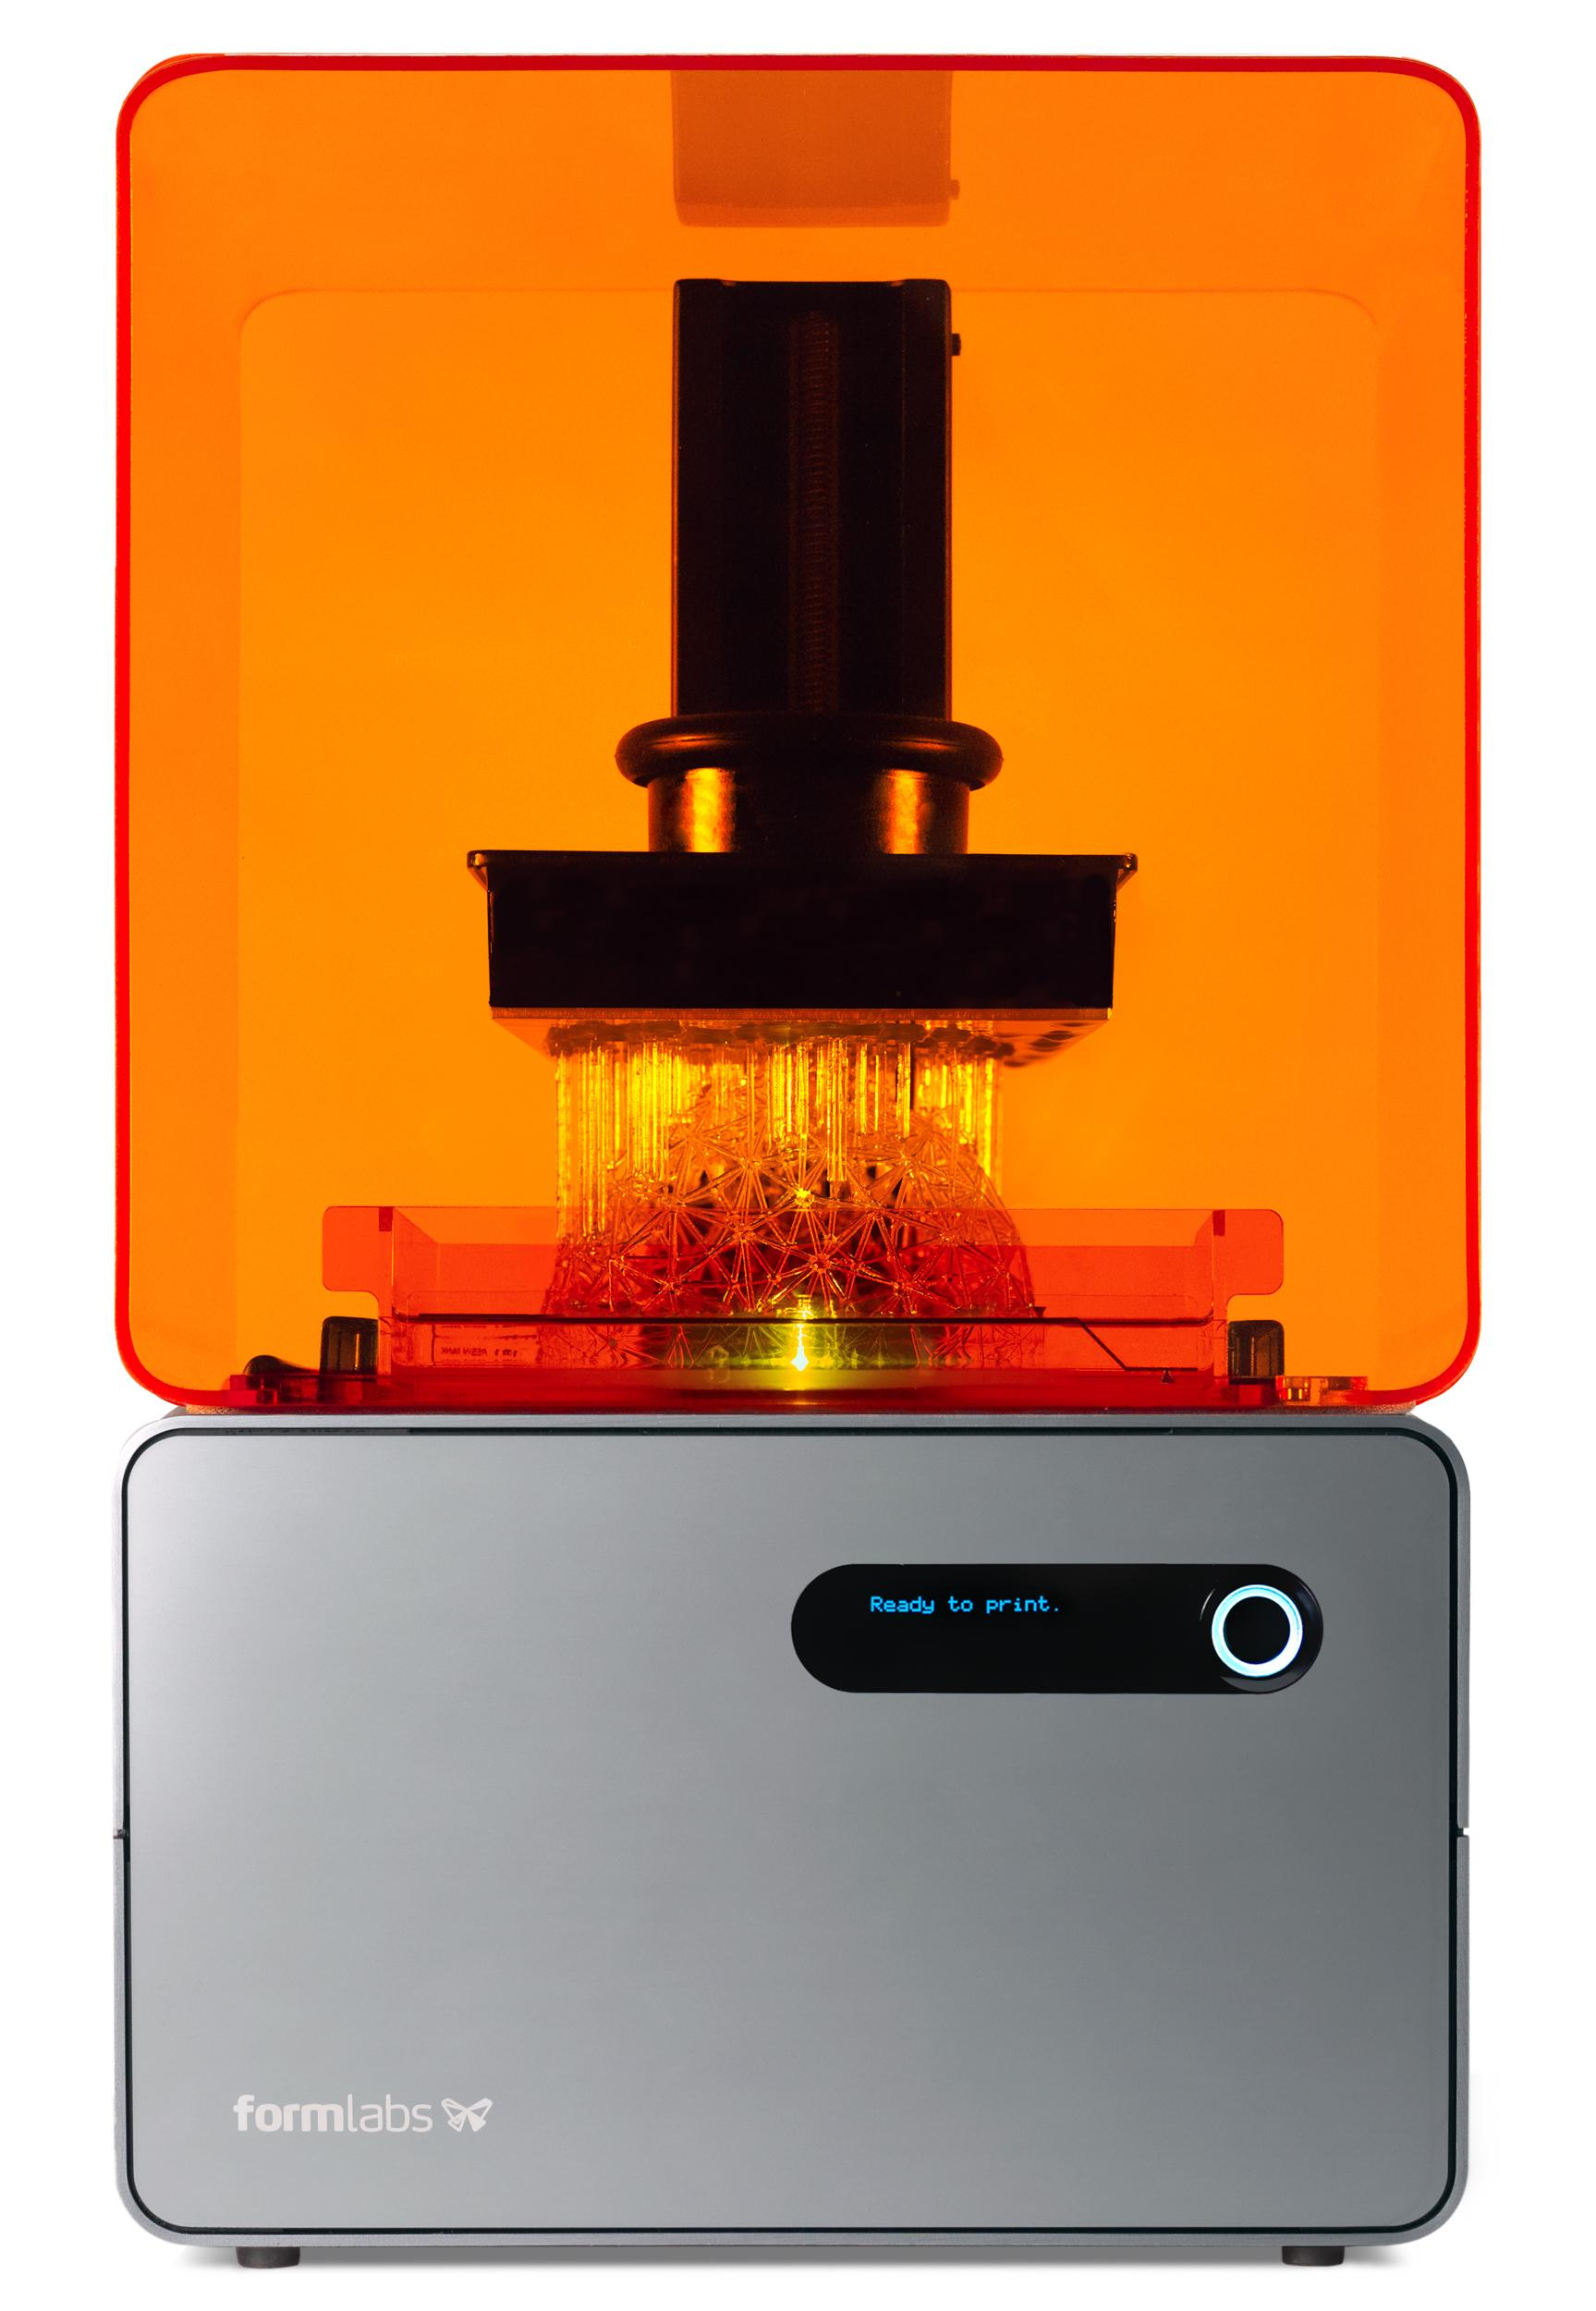 Formlabs Announces Their New Form 1 SLA 3D Printer Upgrade Option